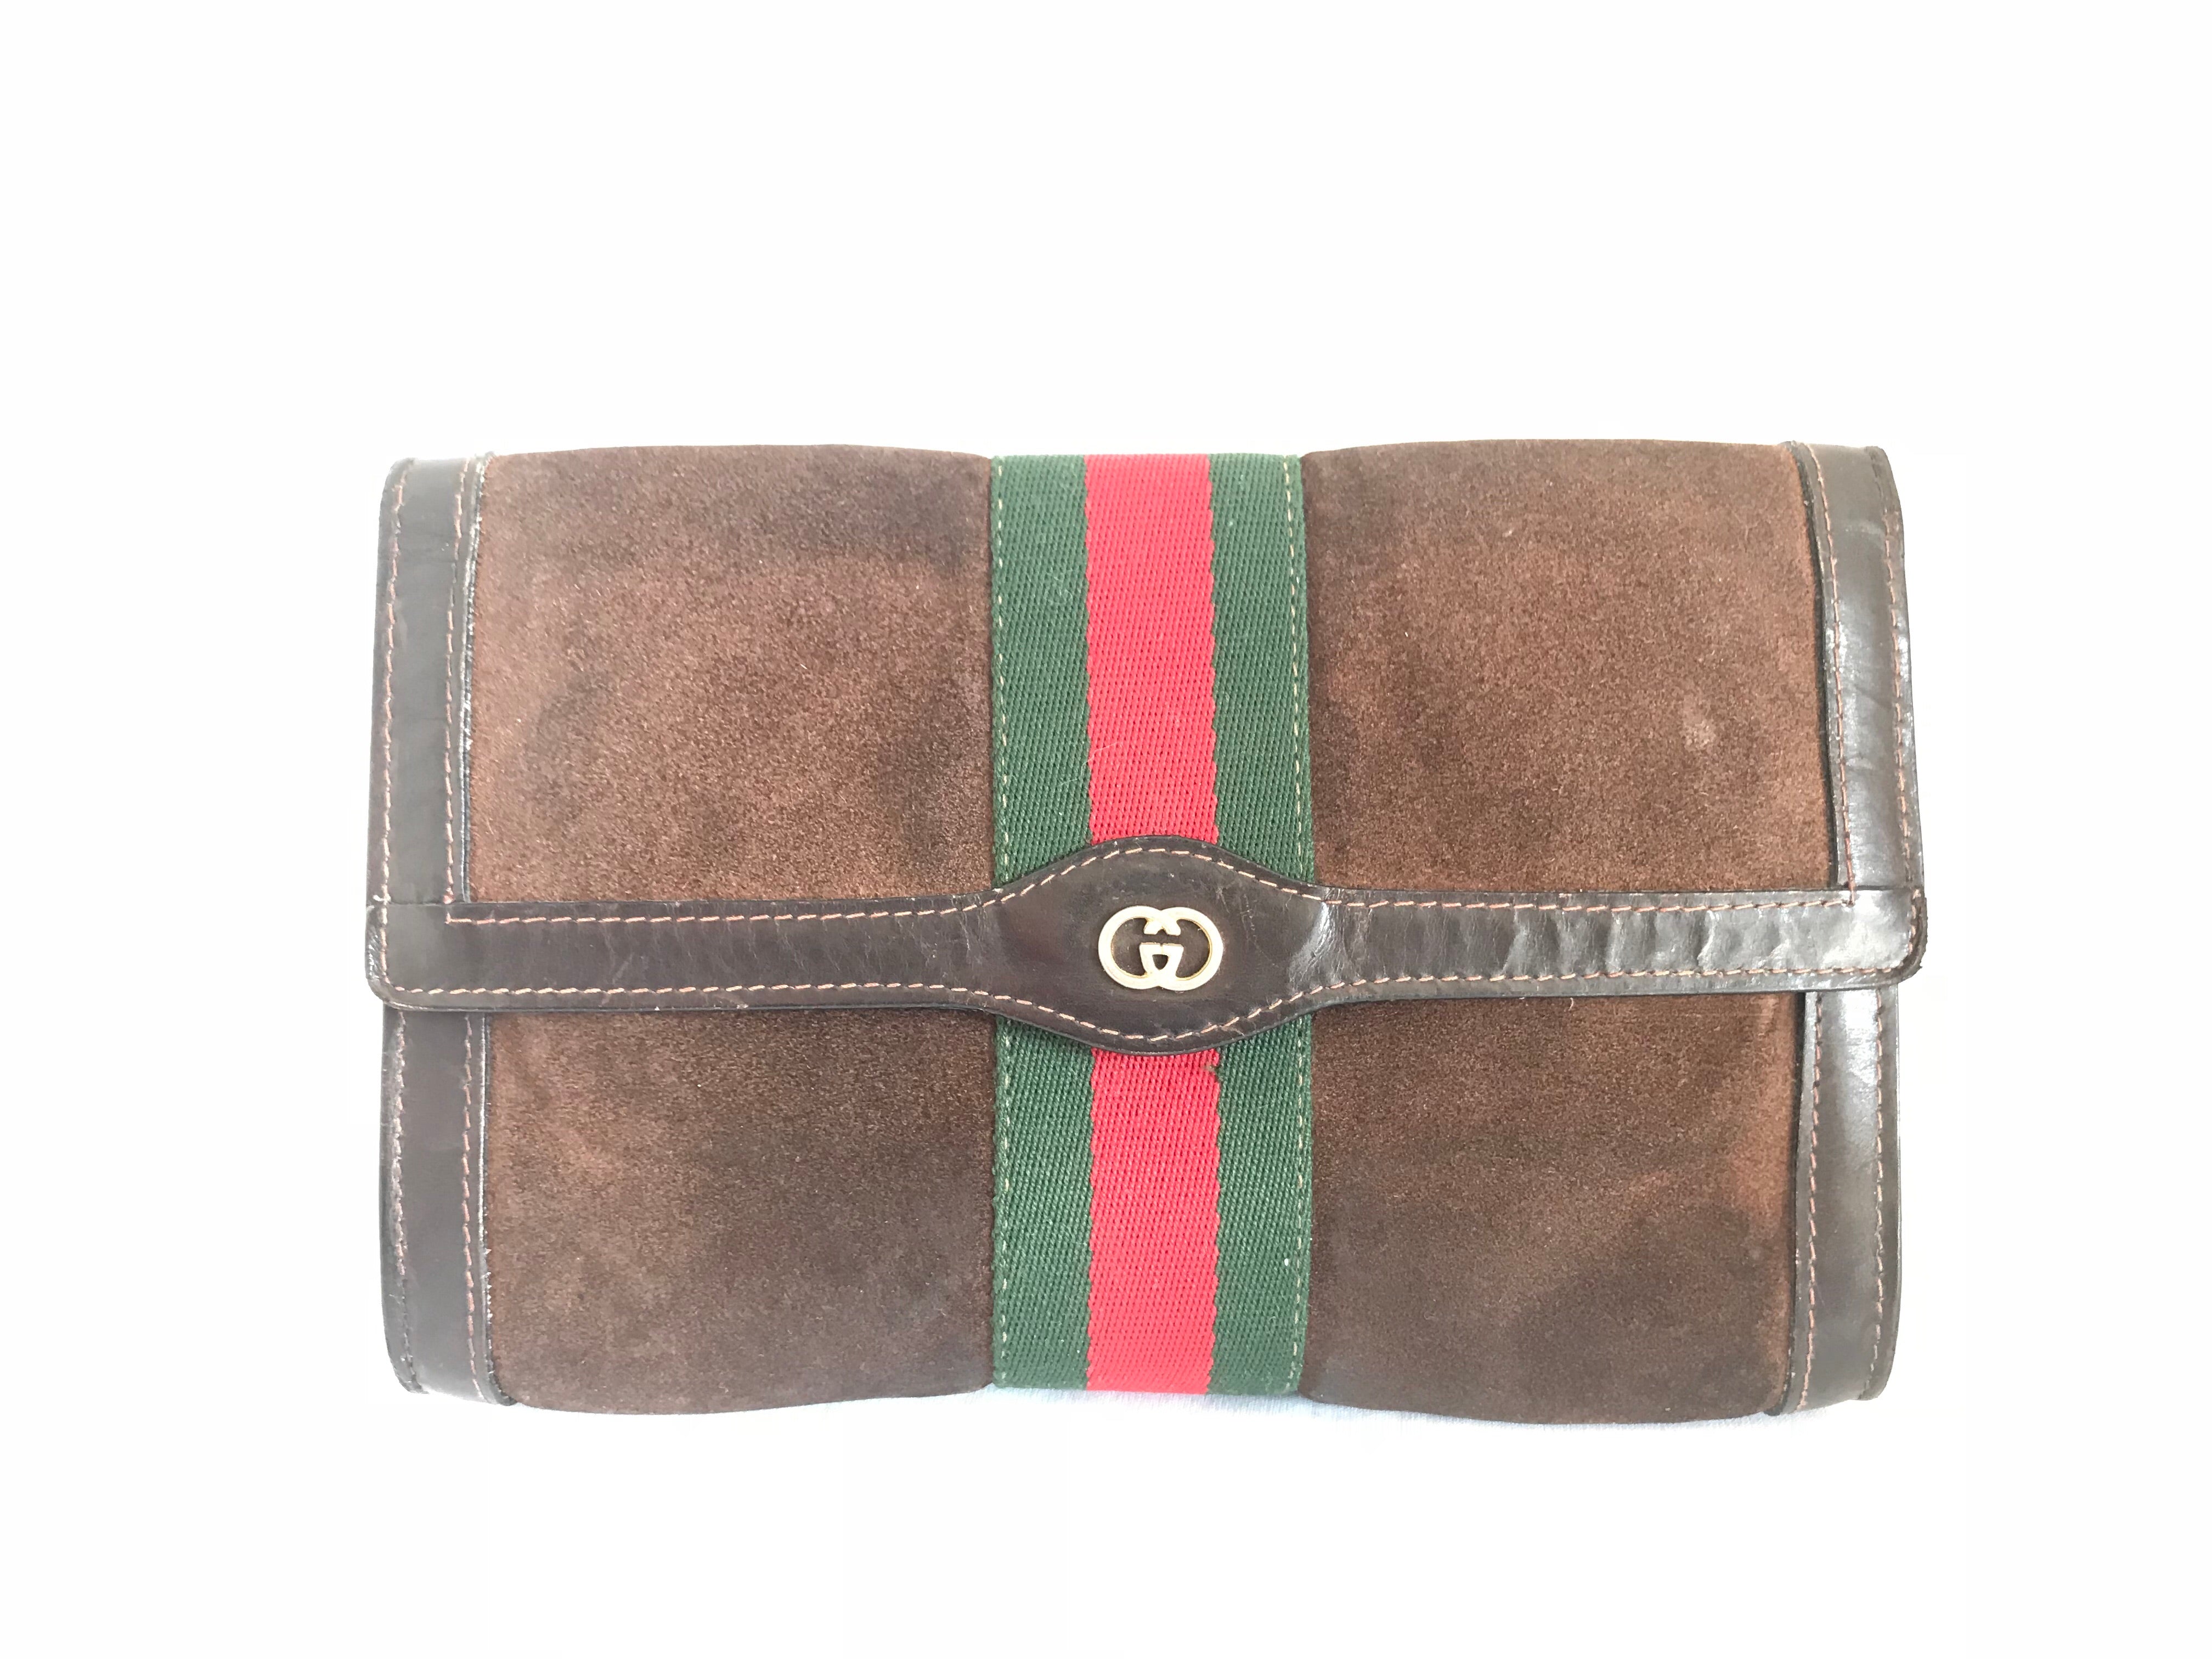 RARE Vintage Gucci Ophidia GG Monogram Wallet Wrist Bag/ Clutch/Purse |  Vintage gucci, Vintage gucci purse, Monogram wallet